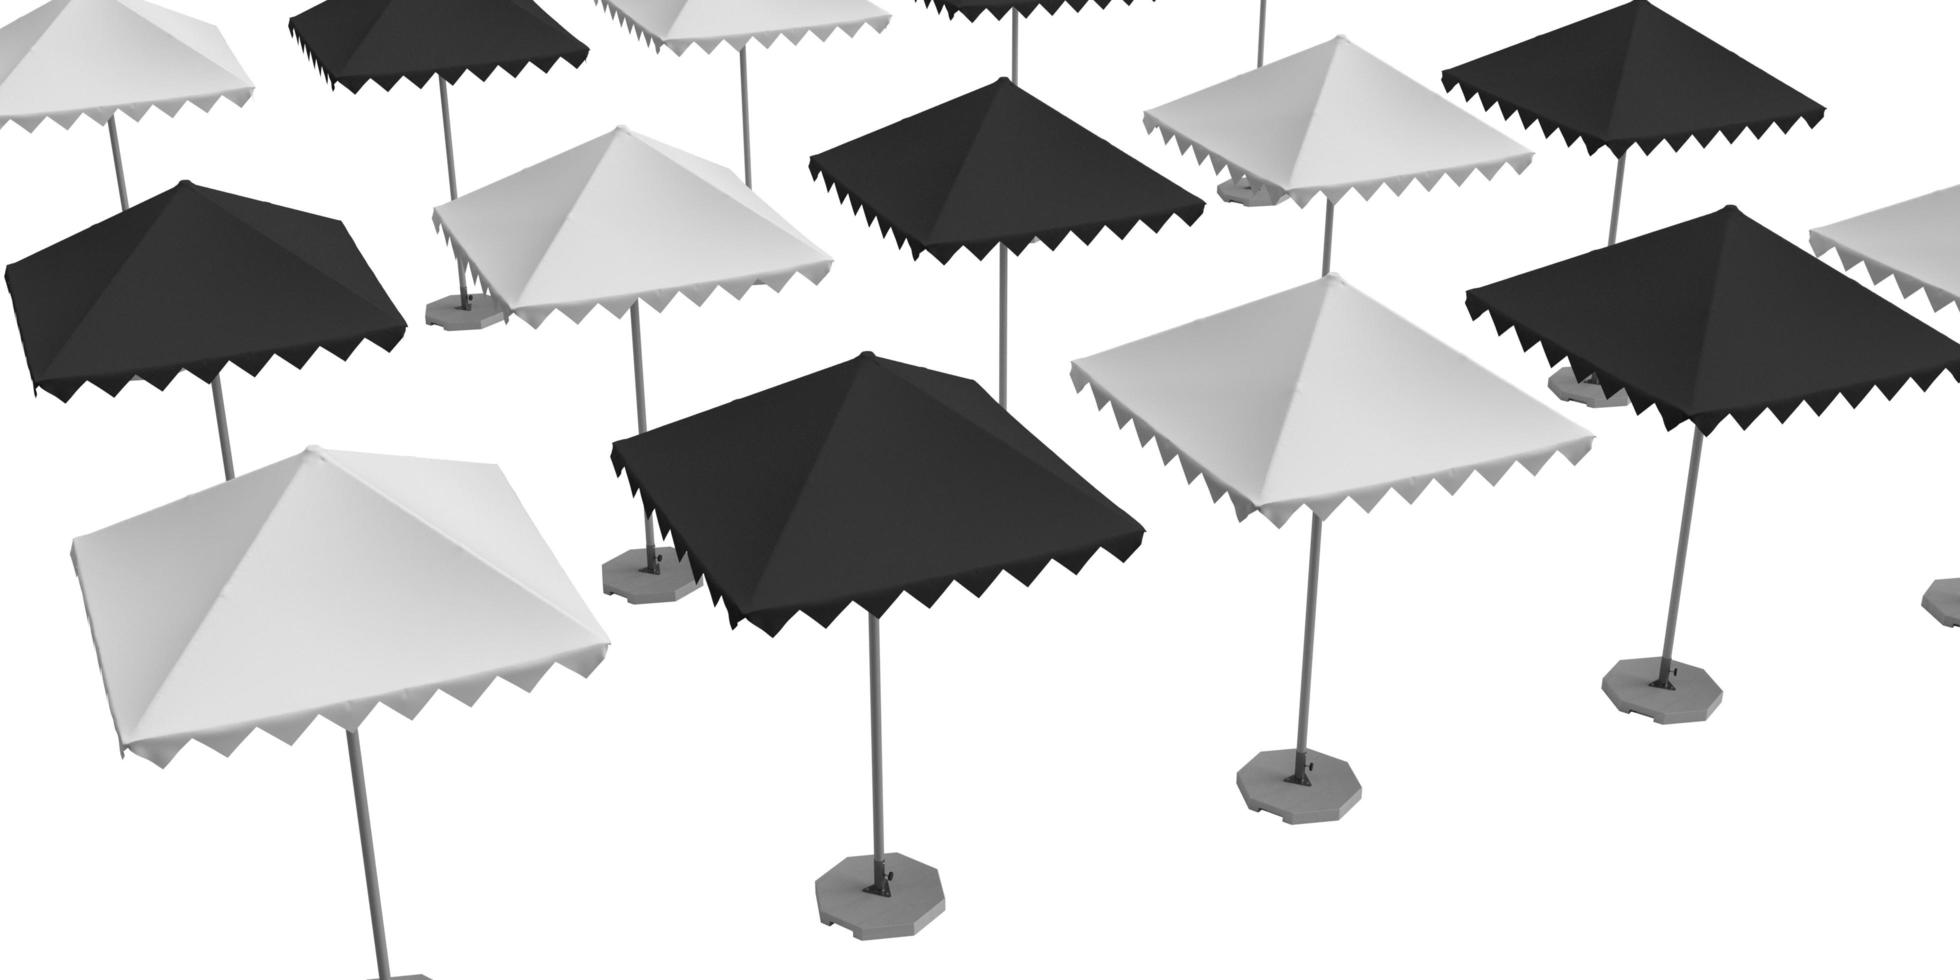 Black and White Umbrella Parasol sun shade mockup isolated on wh photo